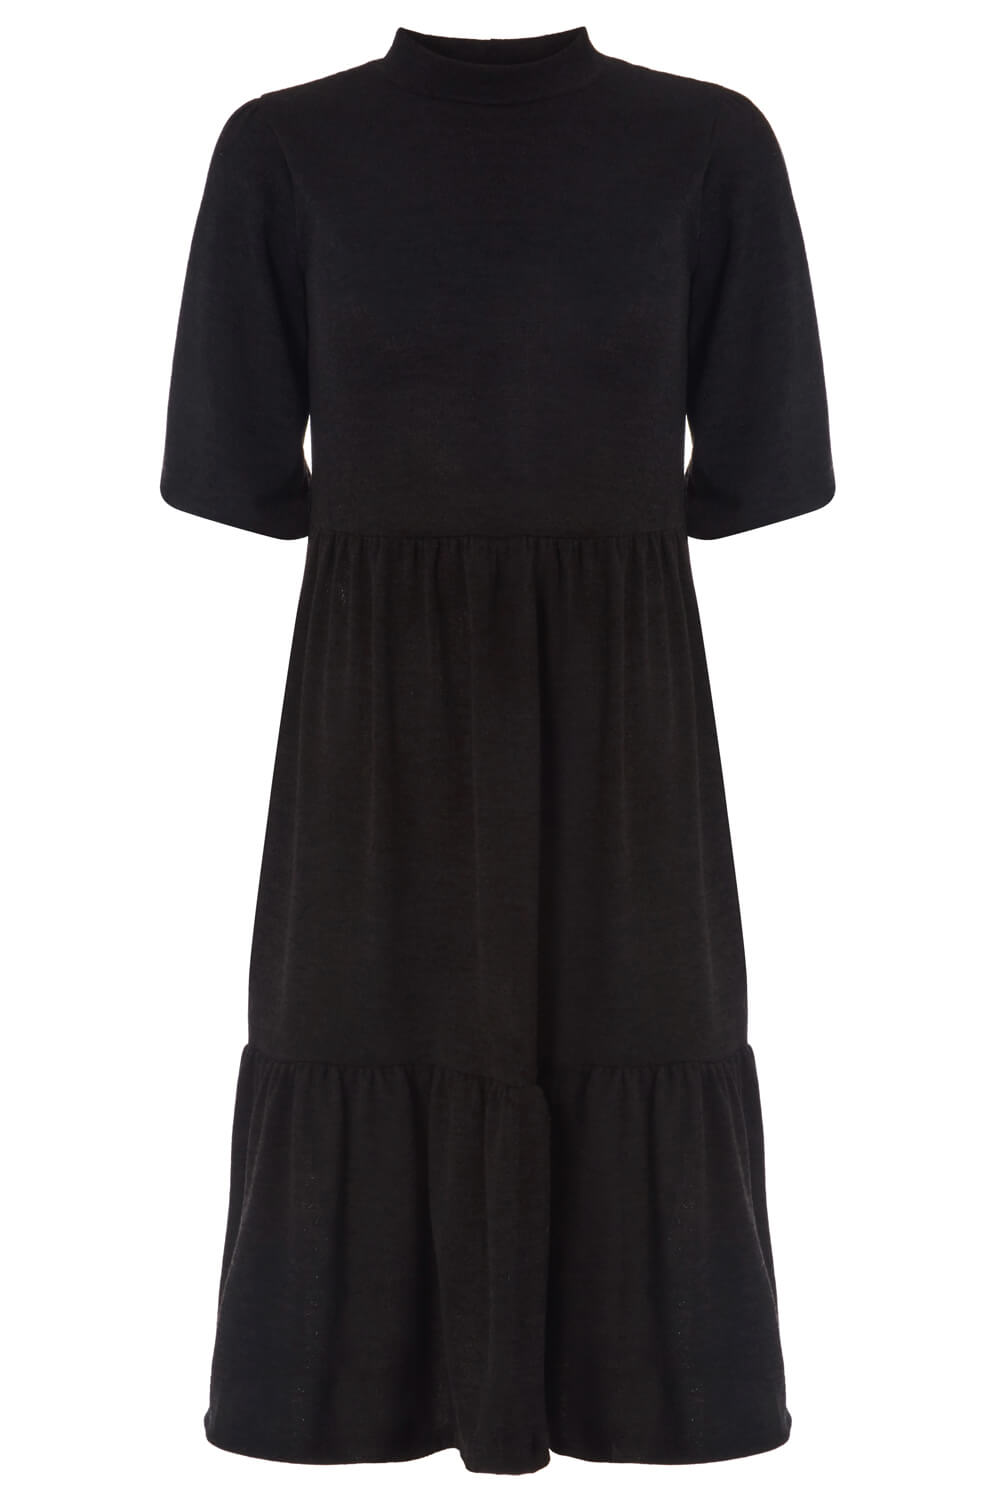 Black Puff Sleeve Knitted Midi Dress, Image 5 of 5